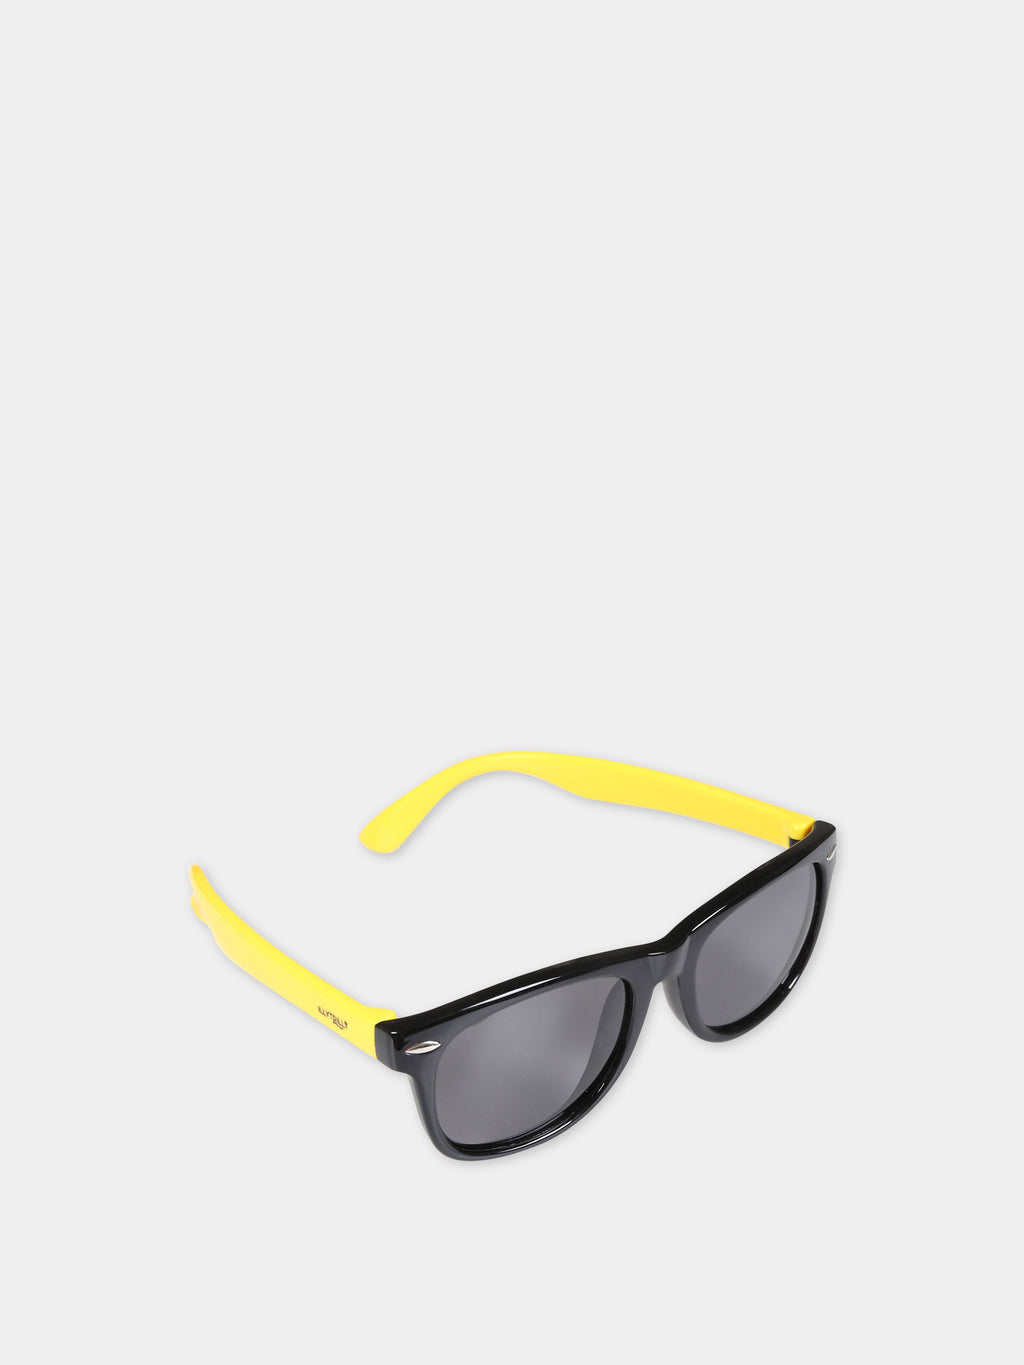 Yellow sunglasses for kids